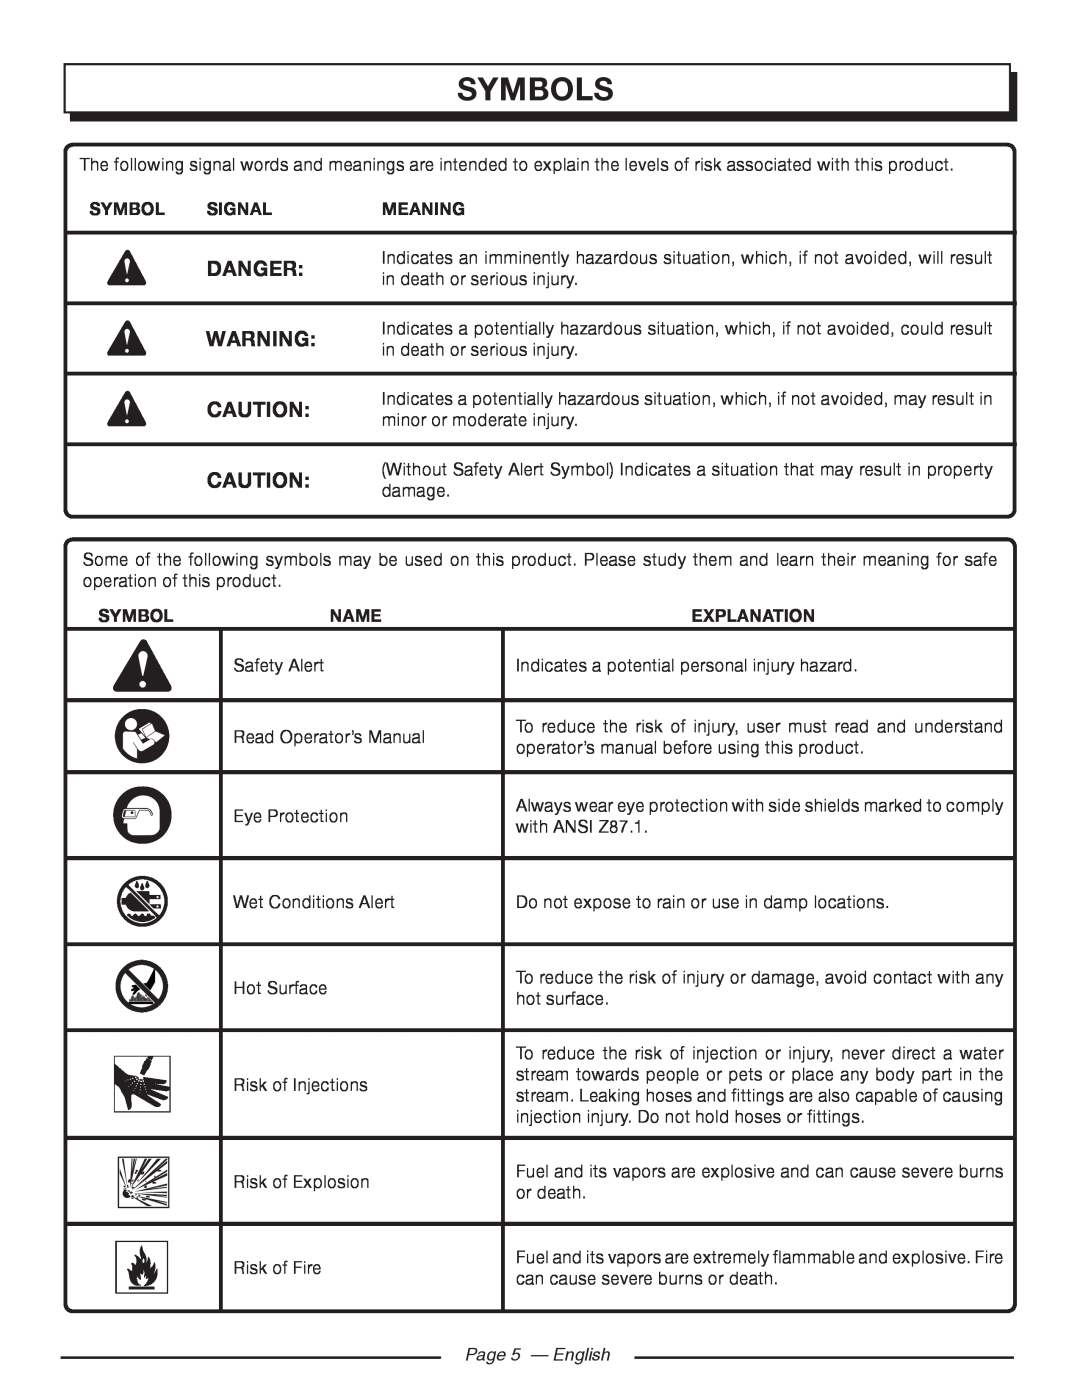 Homelite UT80516 manuel dutilisation Symbols, Danger, Signal, Meaning, Name, Explanation, Page 5 - English 